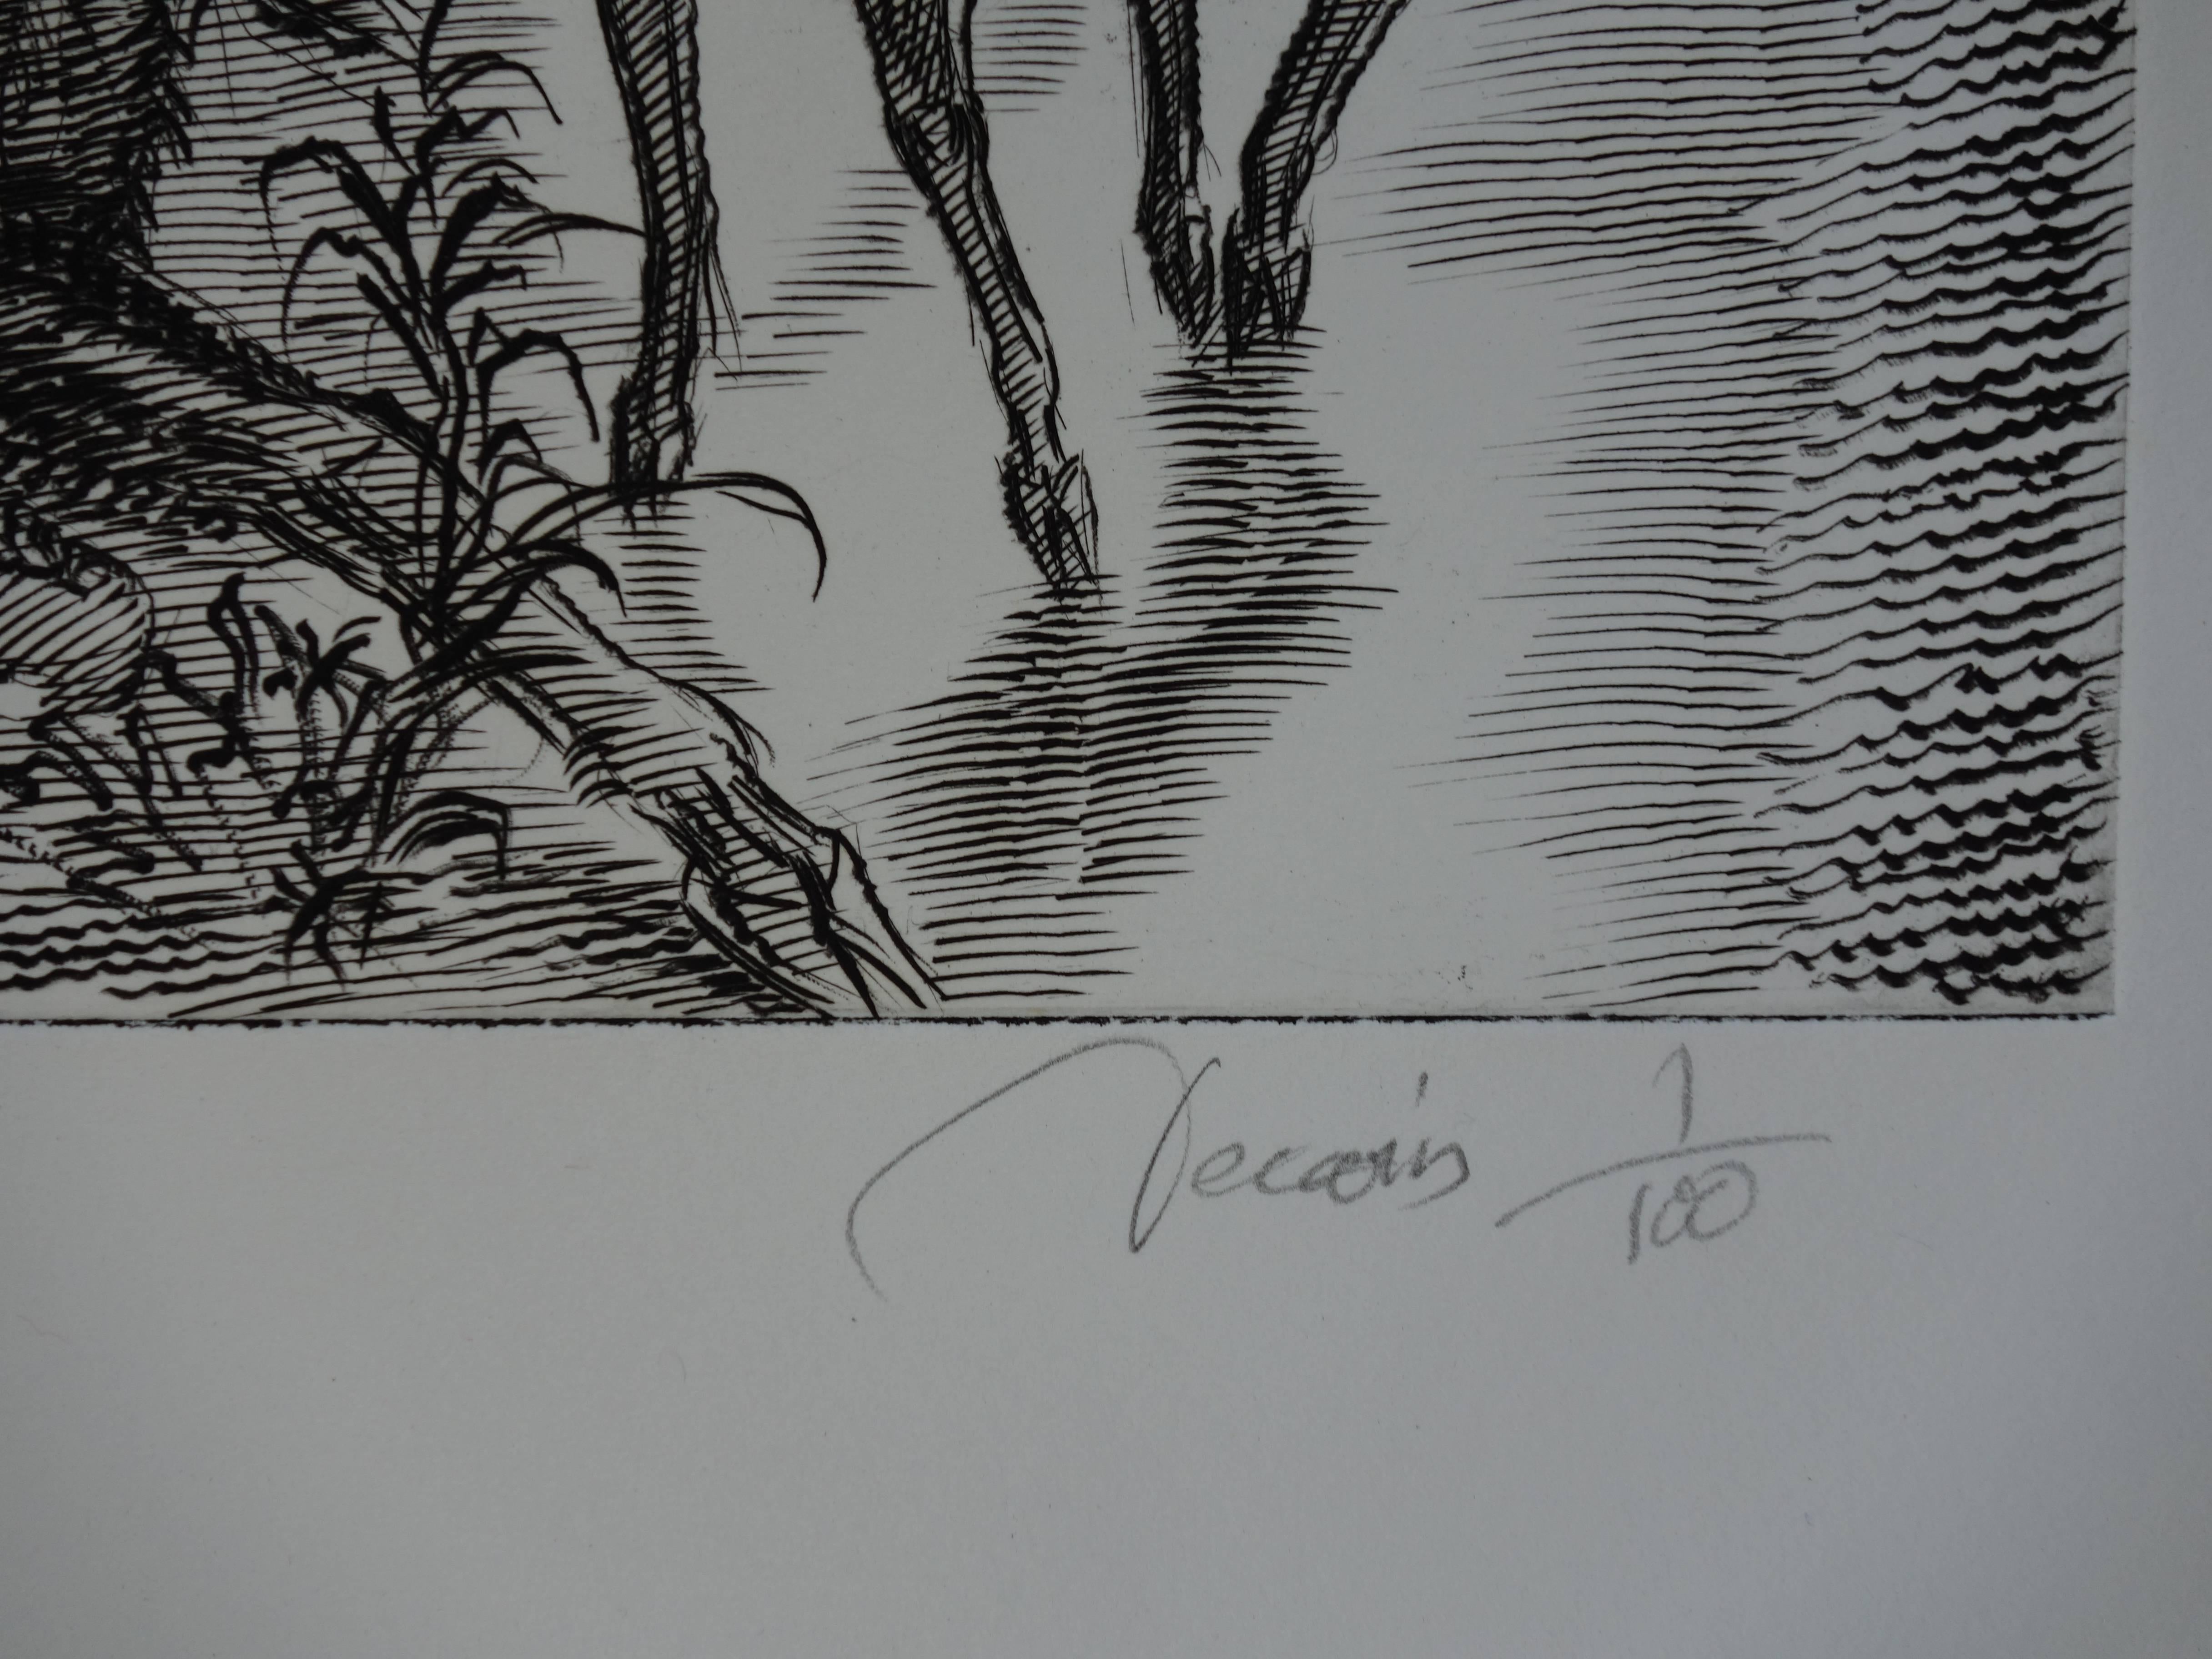 June : the Shepherd - Original handsigned etching - Exceptional n° 1/100 - Print by Albert Decaris